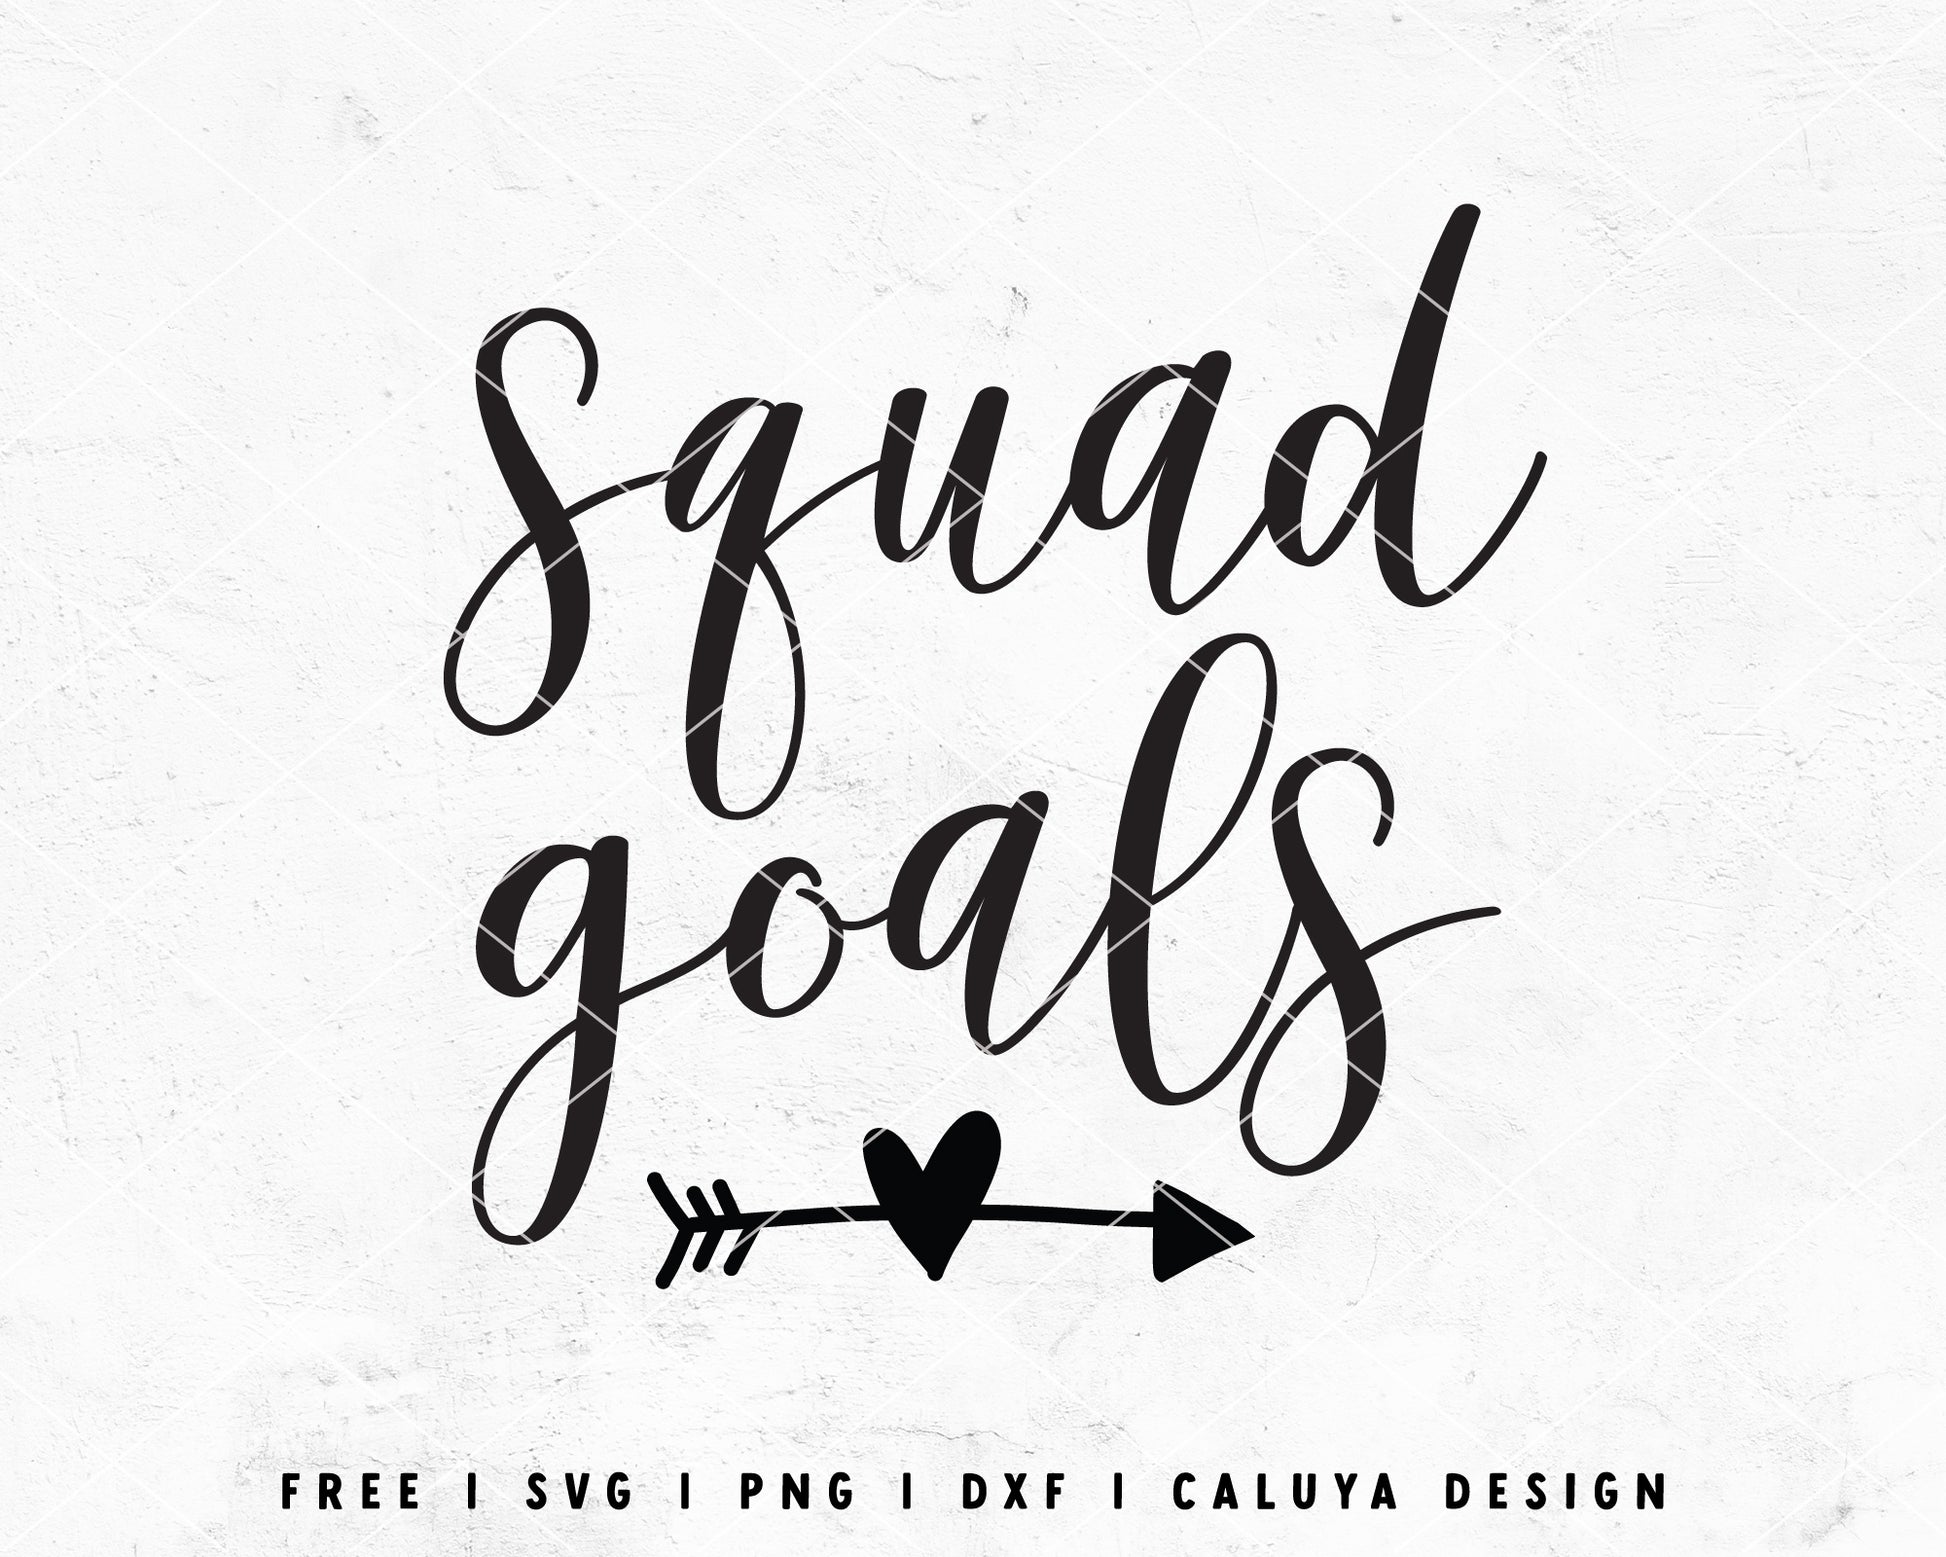 FREE Squad Goals SVG Cut File for Cricut, Cameo Silhouette | Free SVG Cut File